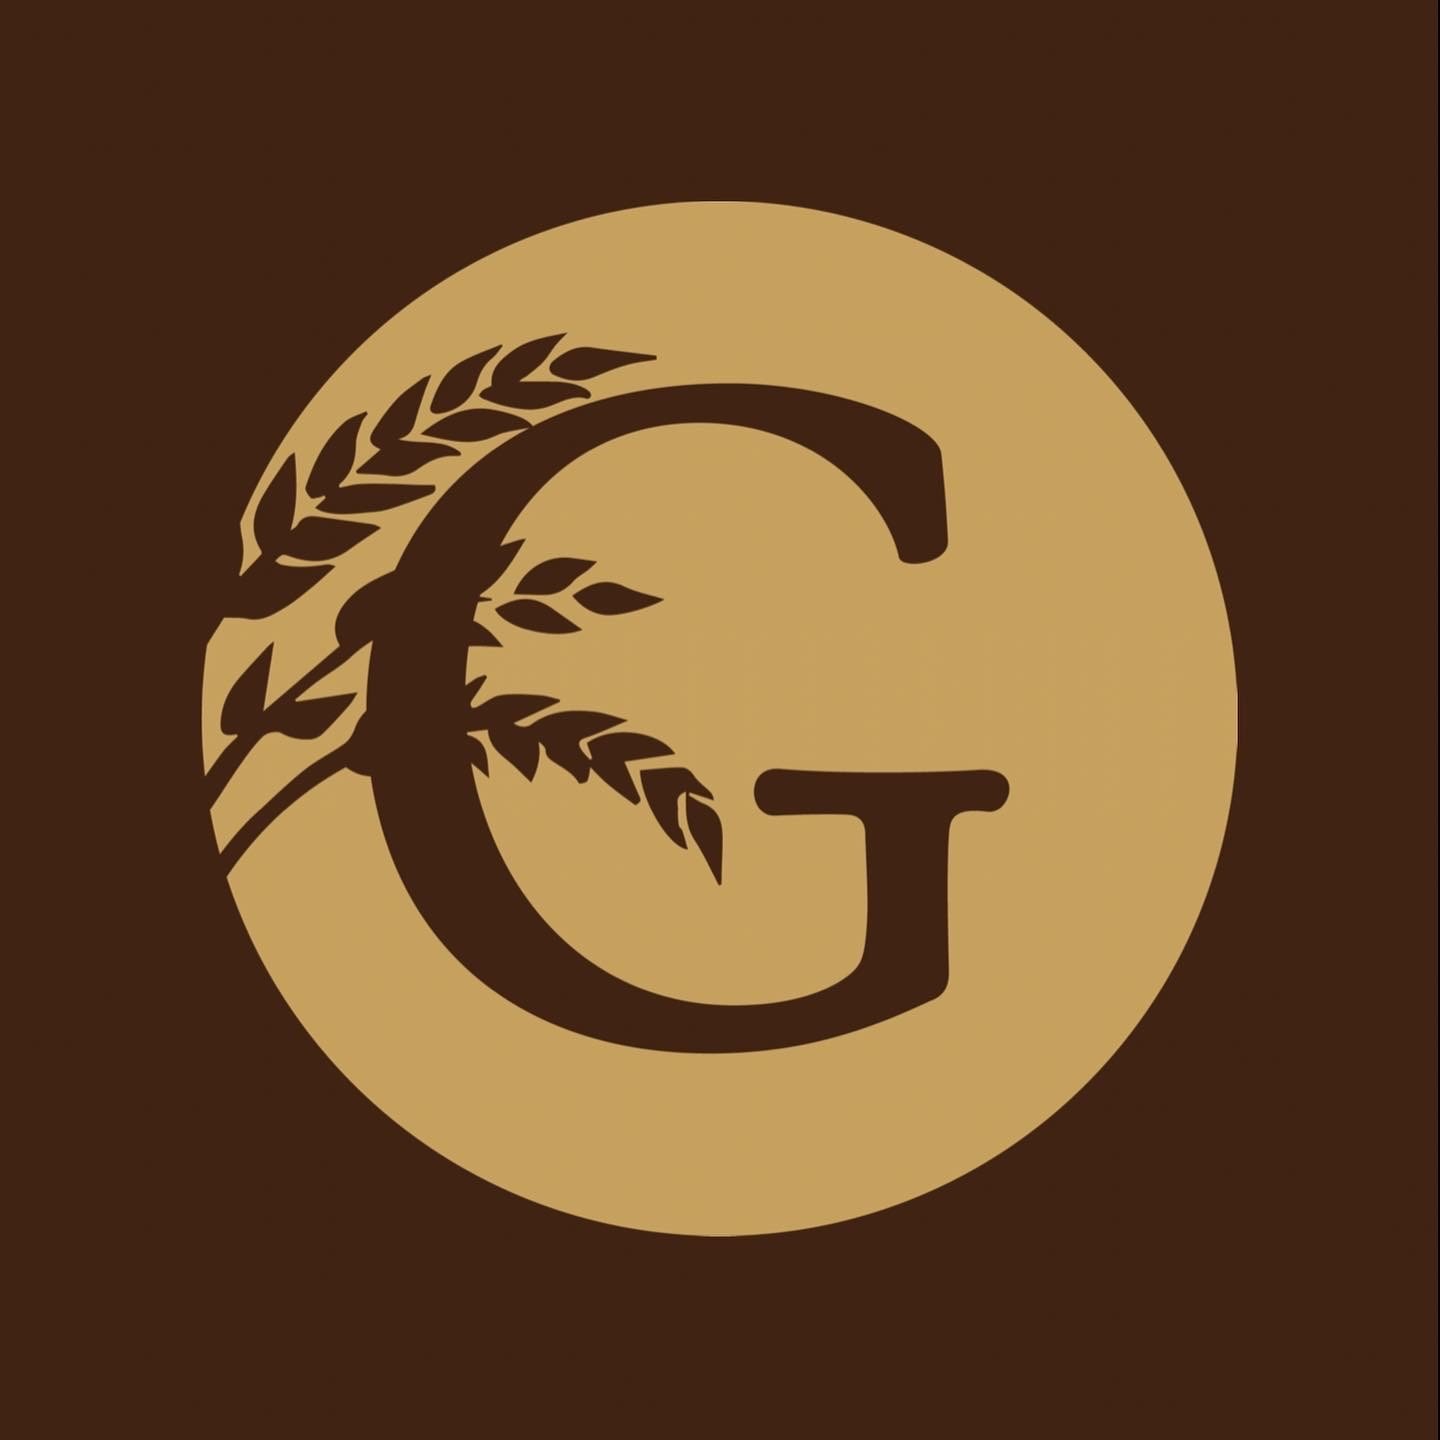 gs logo 2.jpg